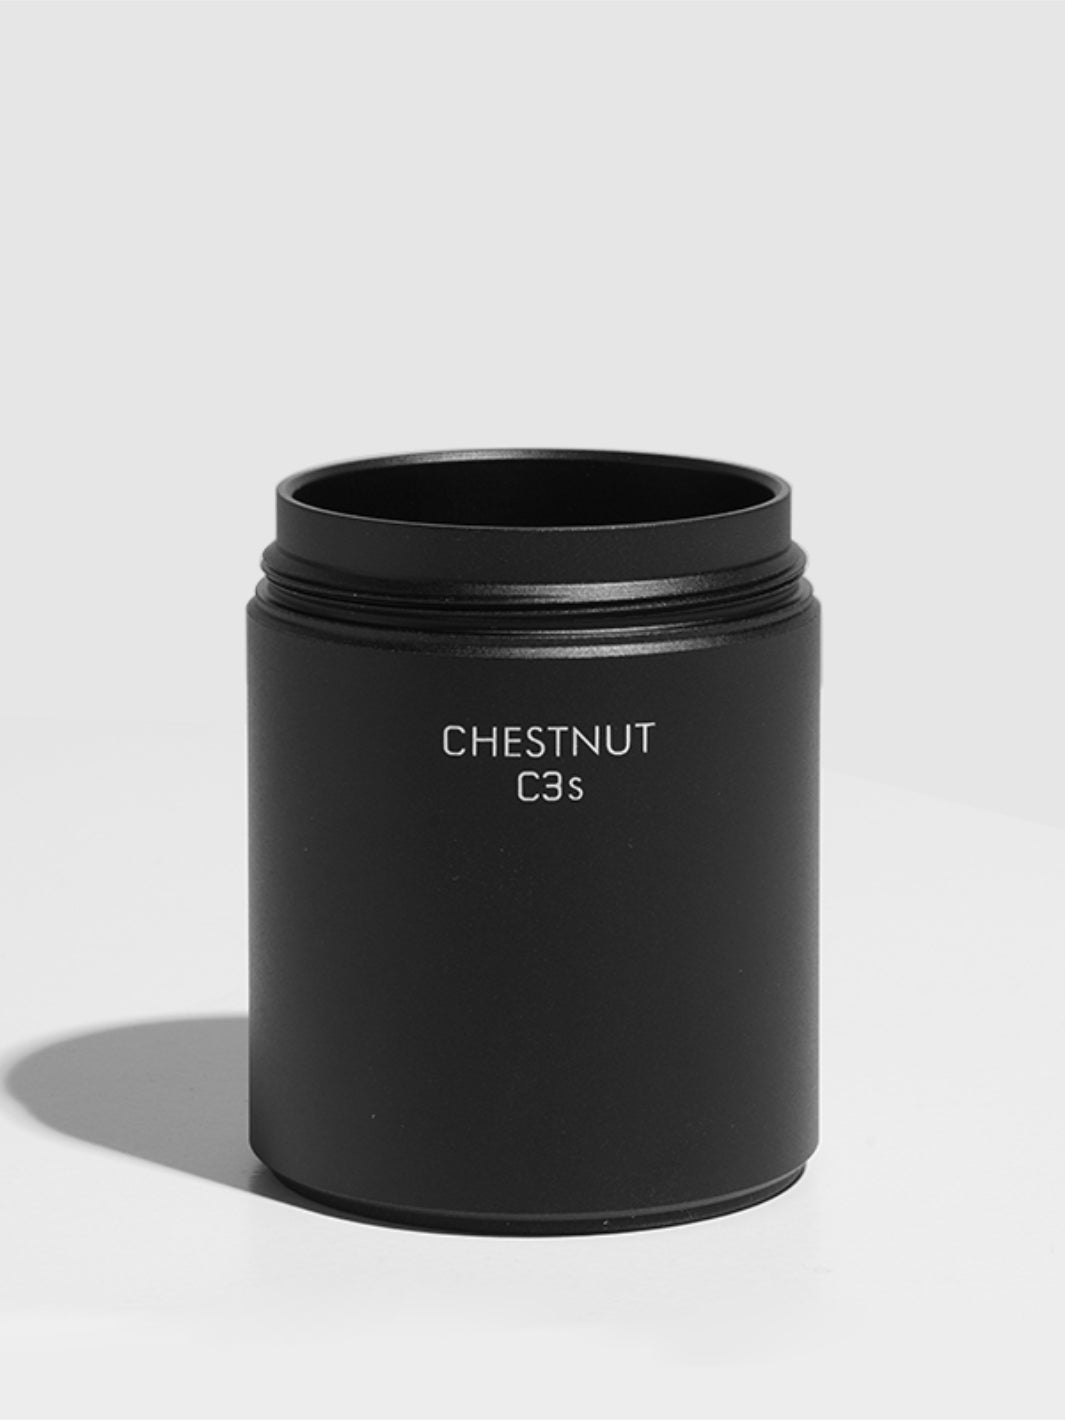 TIMEMORE Chestnut C3s Grinder